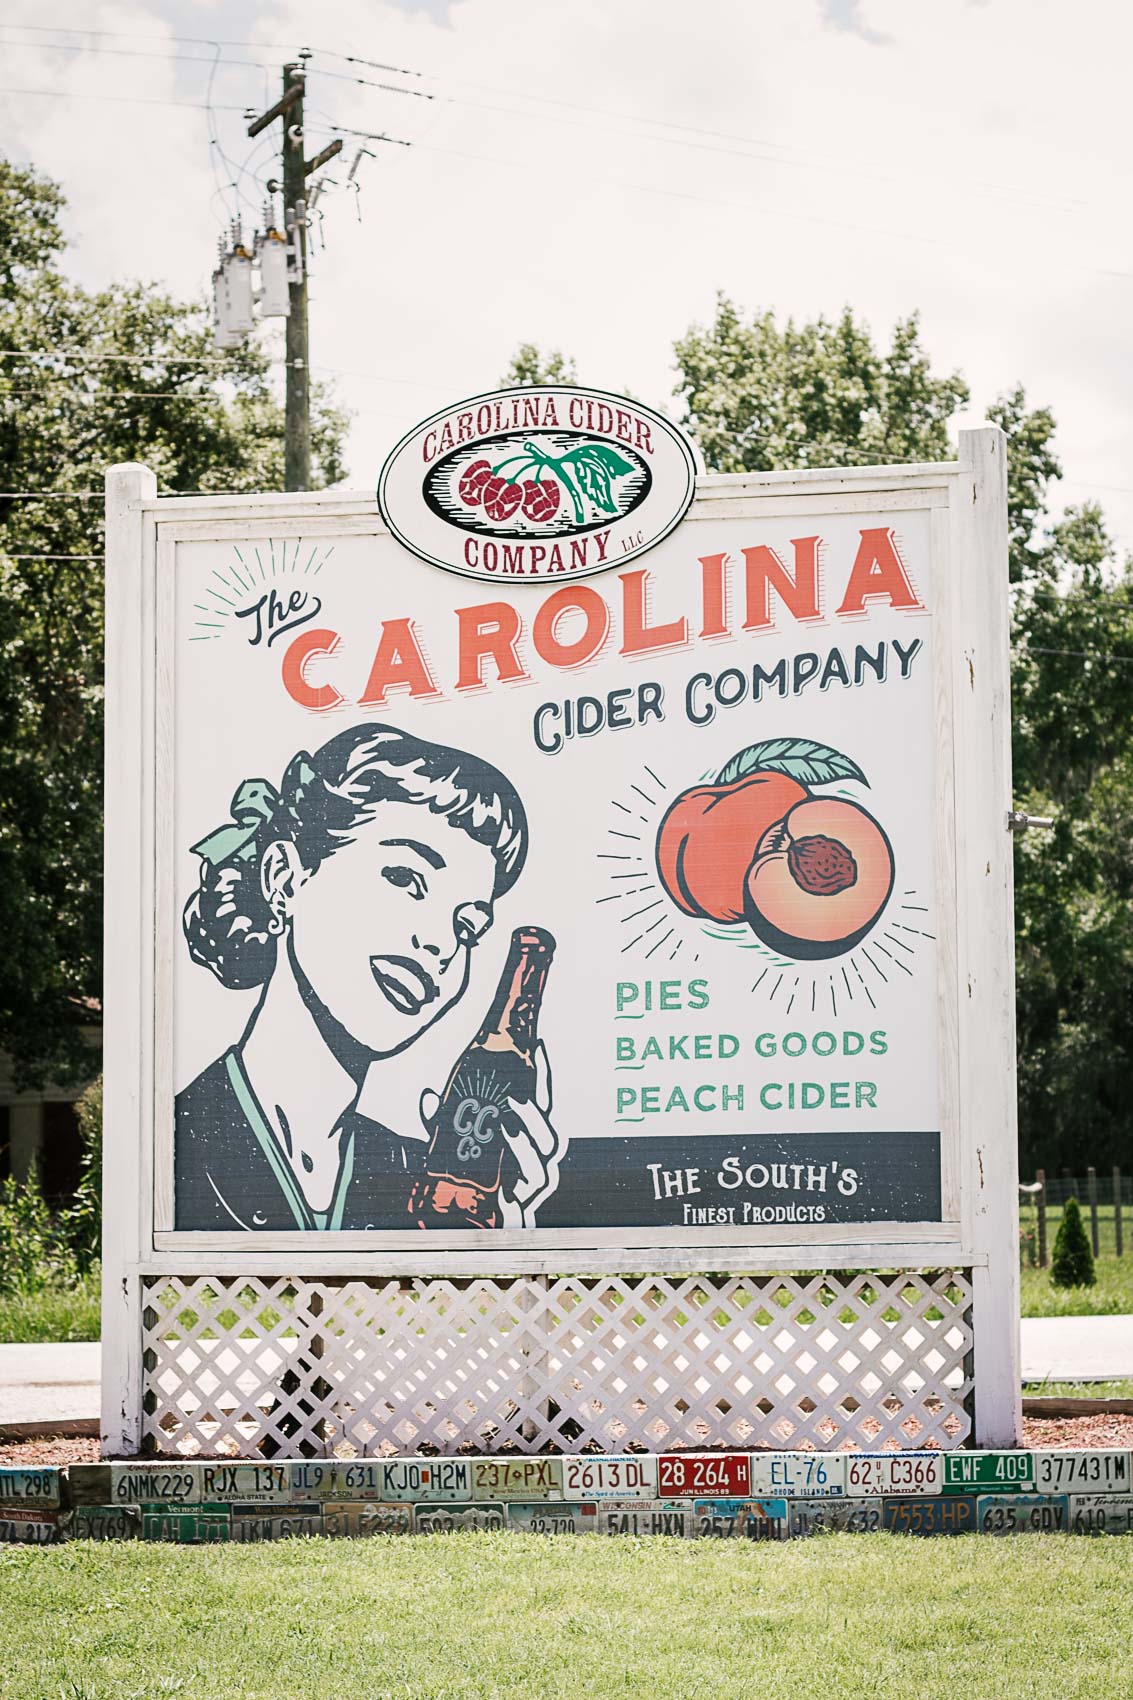 A stop at the Carolina Cider Company on the way to Savannah, Georgia